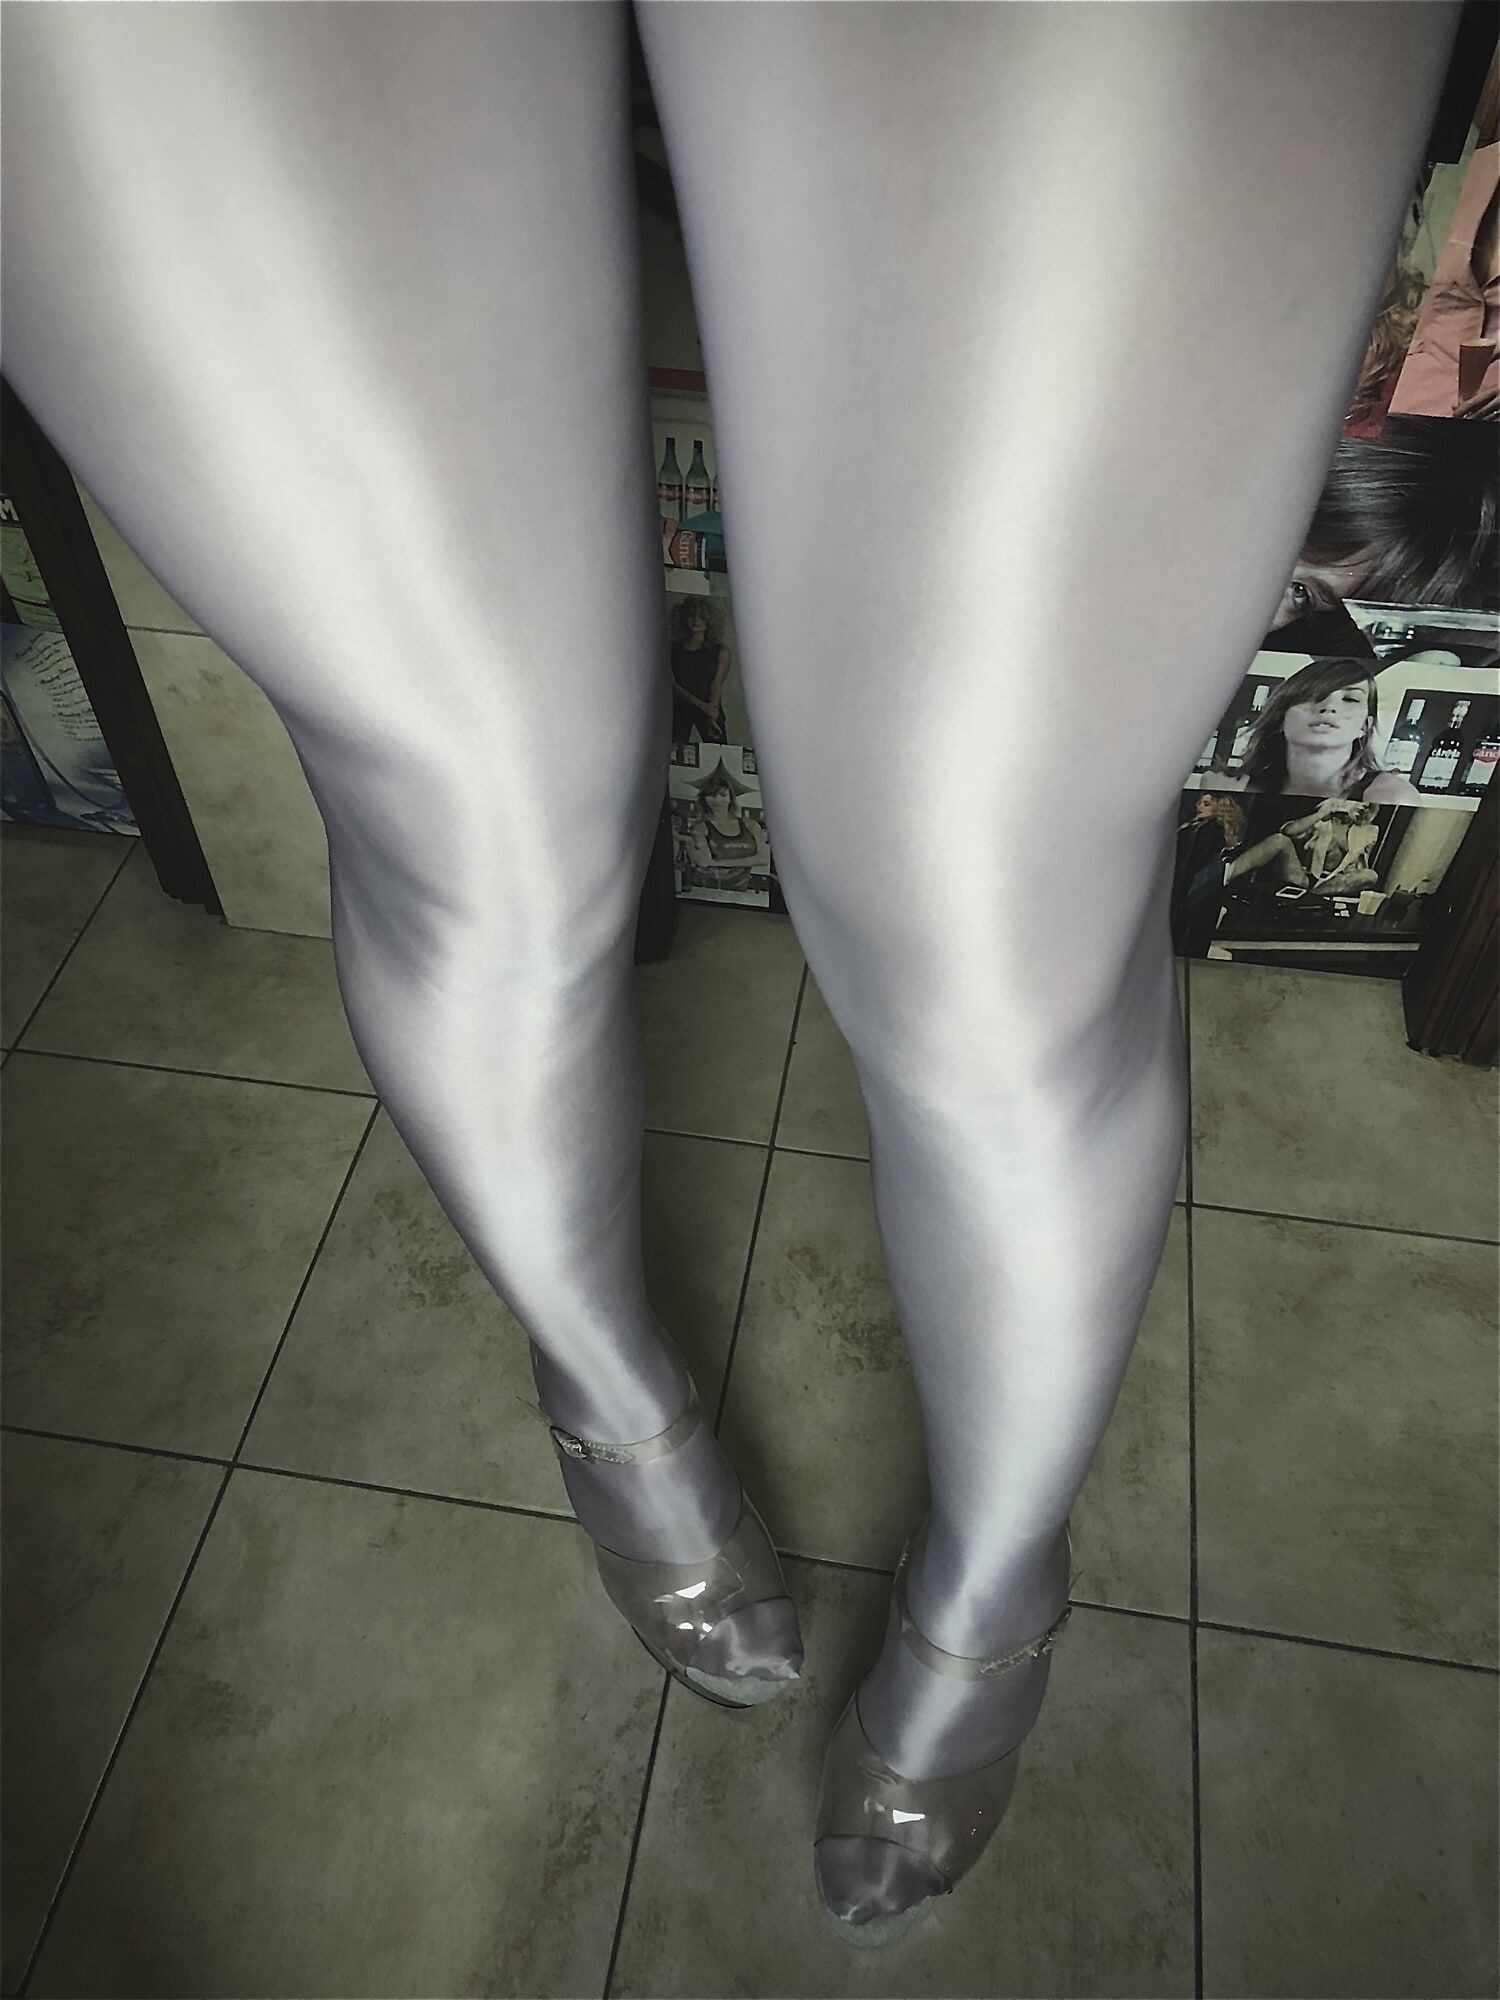 My legs on shiny pantyhose! #12